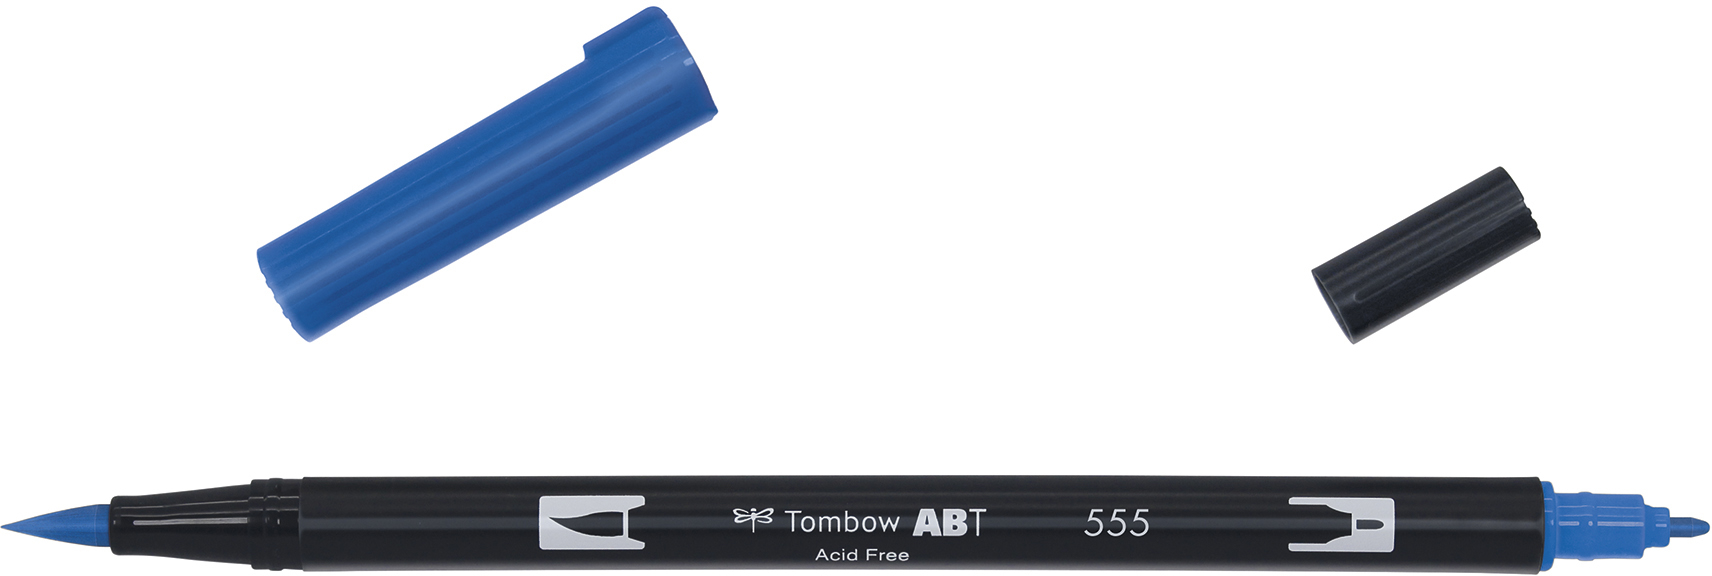 TOMBOW Dual Brush Pen ABT 555 ultramarine ultramarine